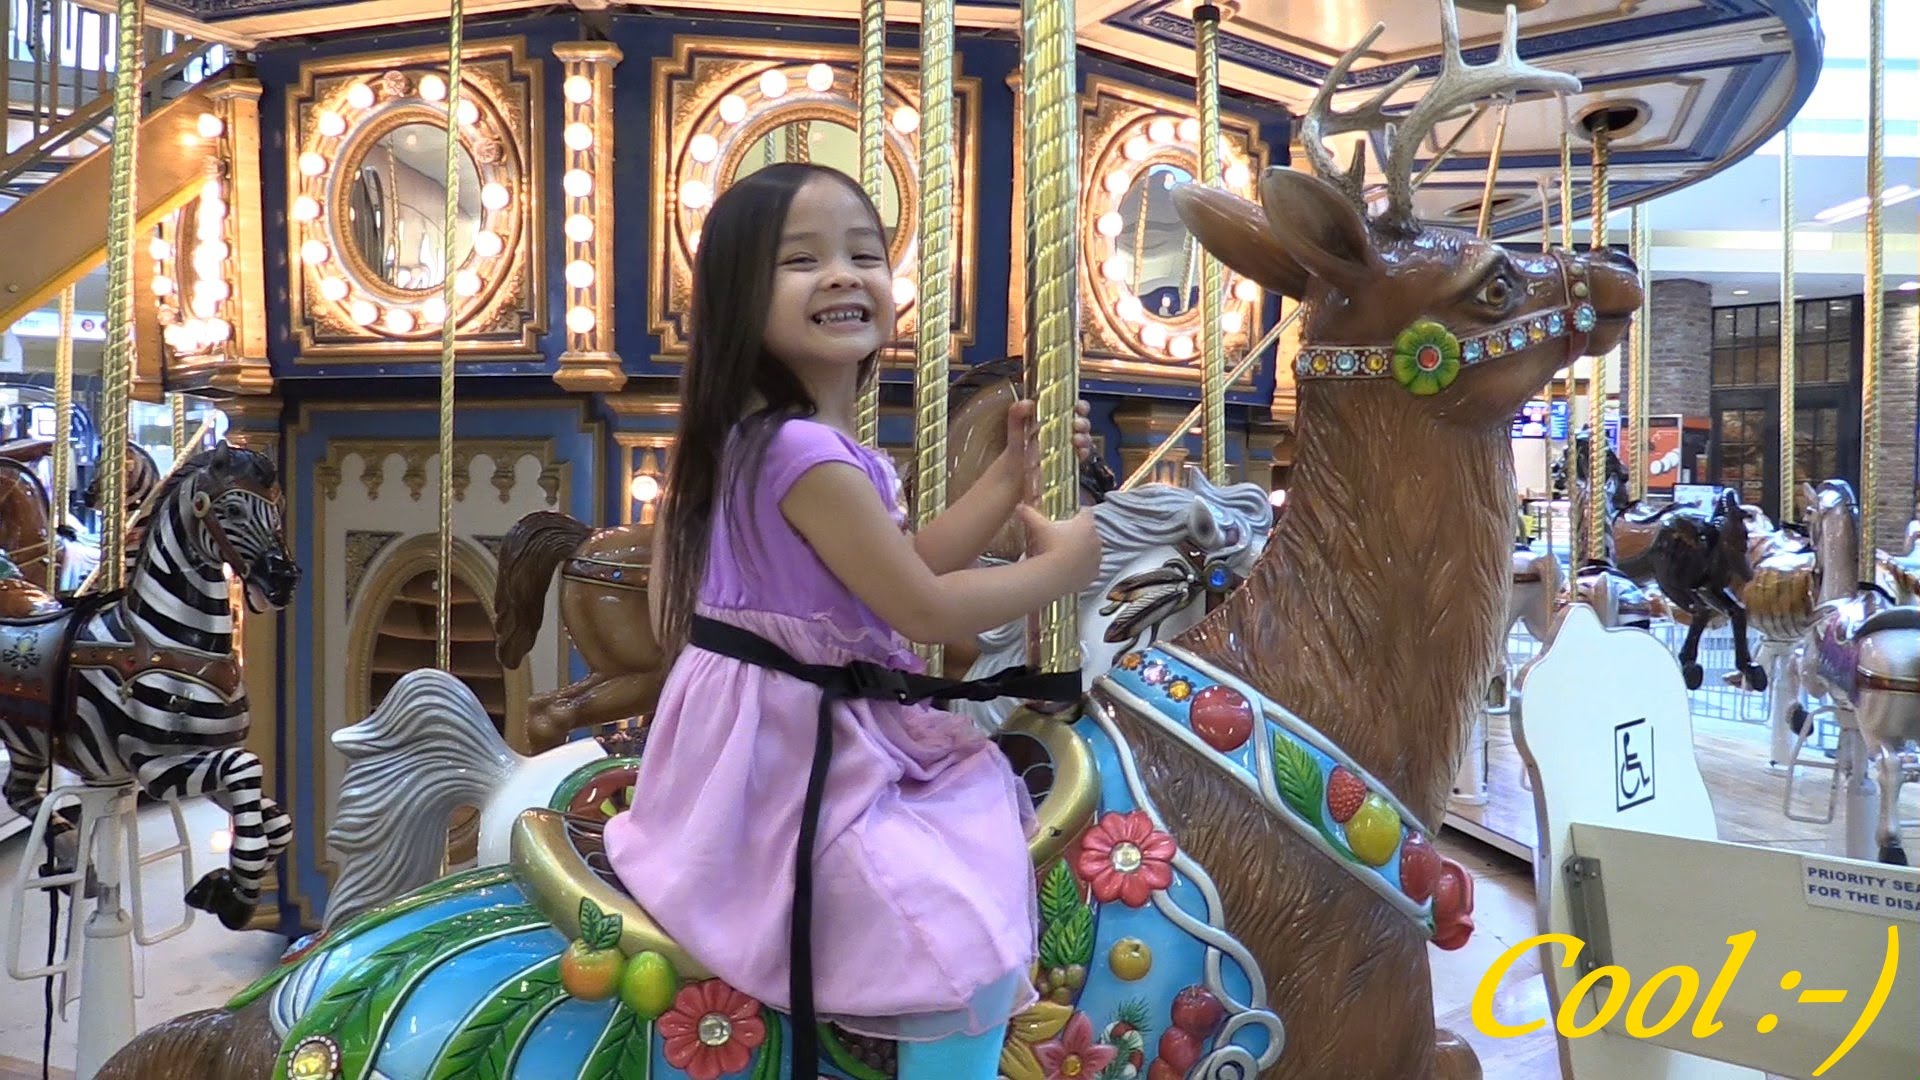 Carousel Ride: Mall Indoor Carousel Ride w/ Maya and Marxlen + Hello ...